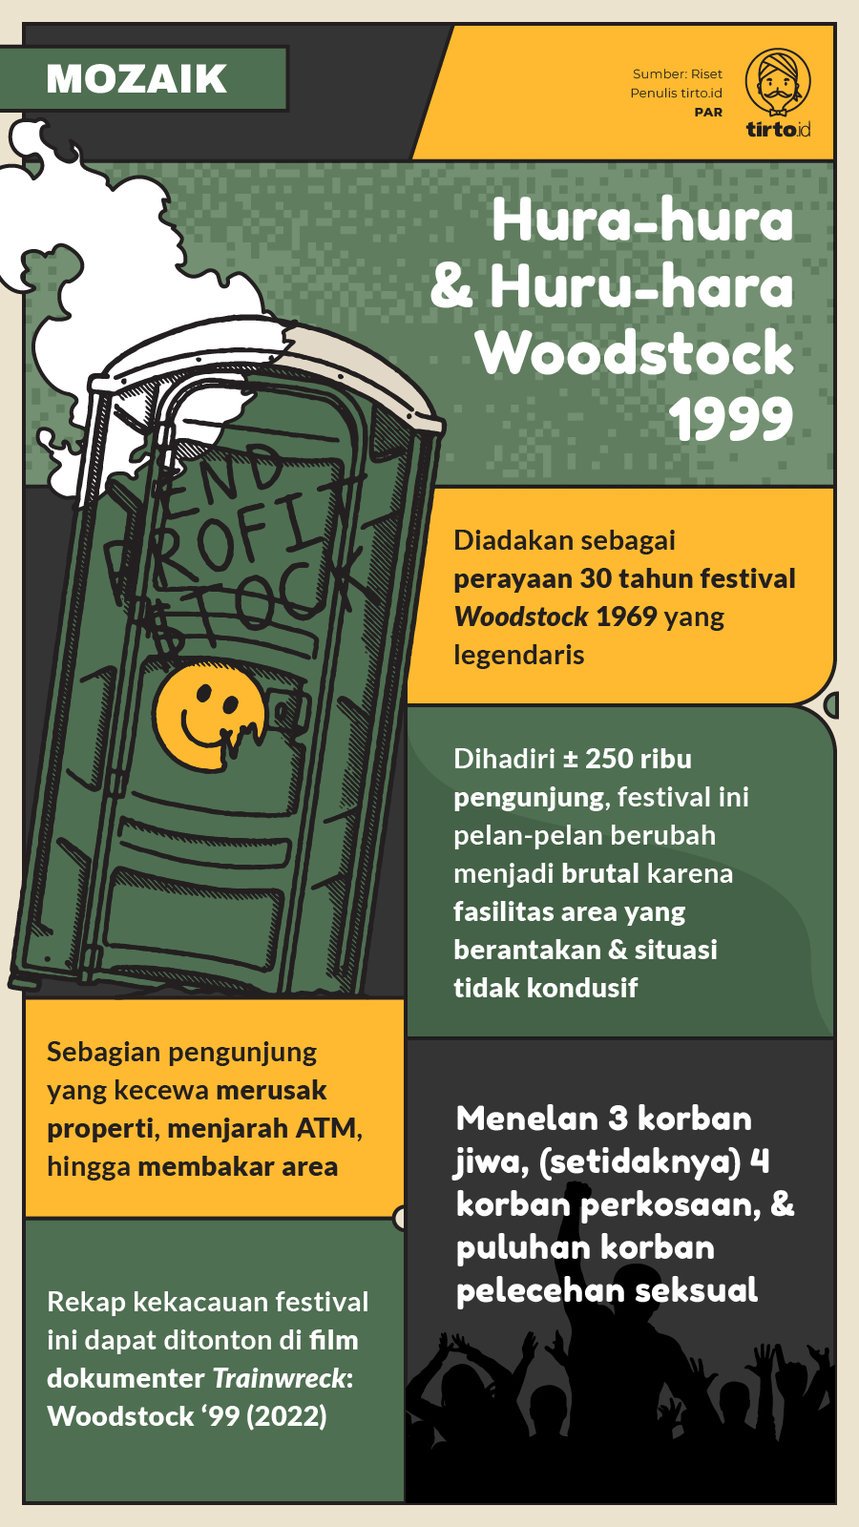 Infografik Mozaik Woodstock 1999